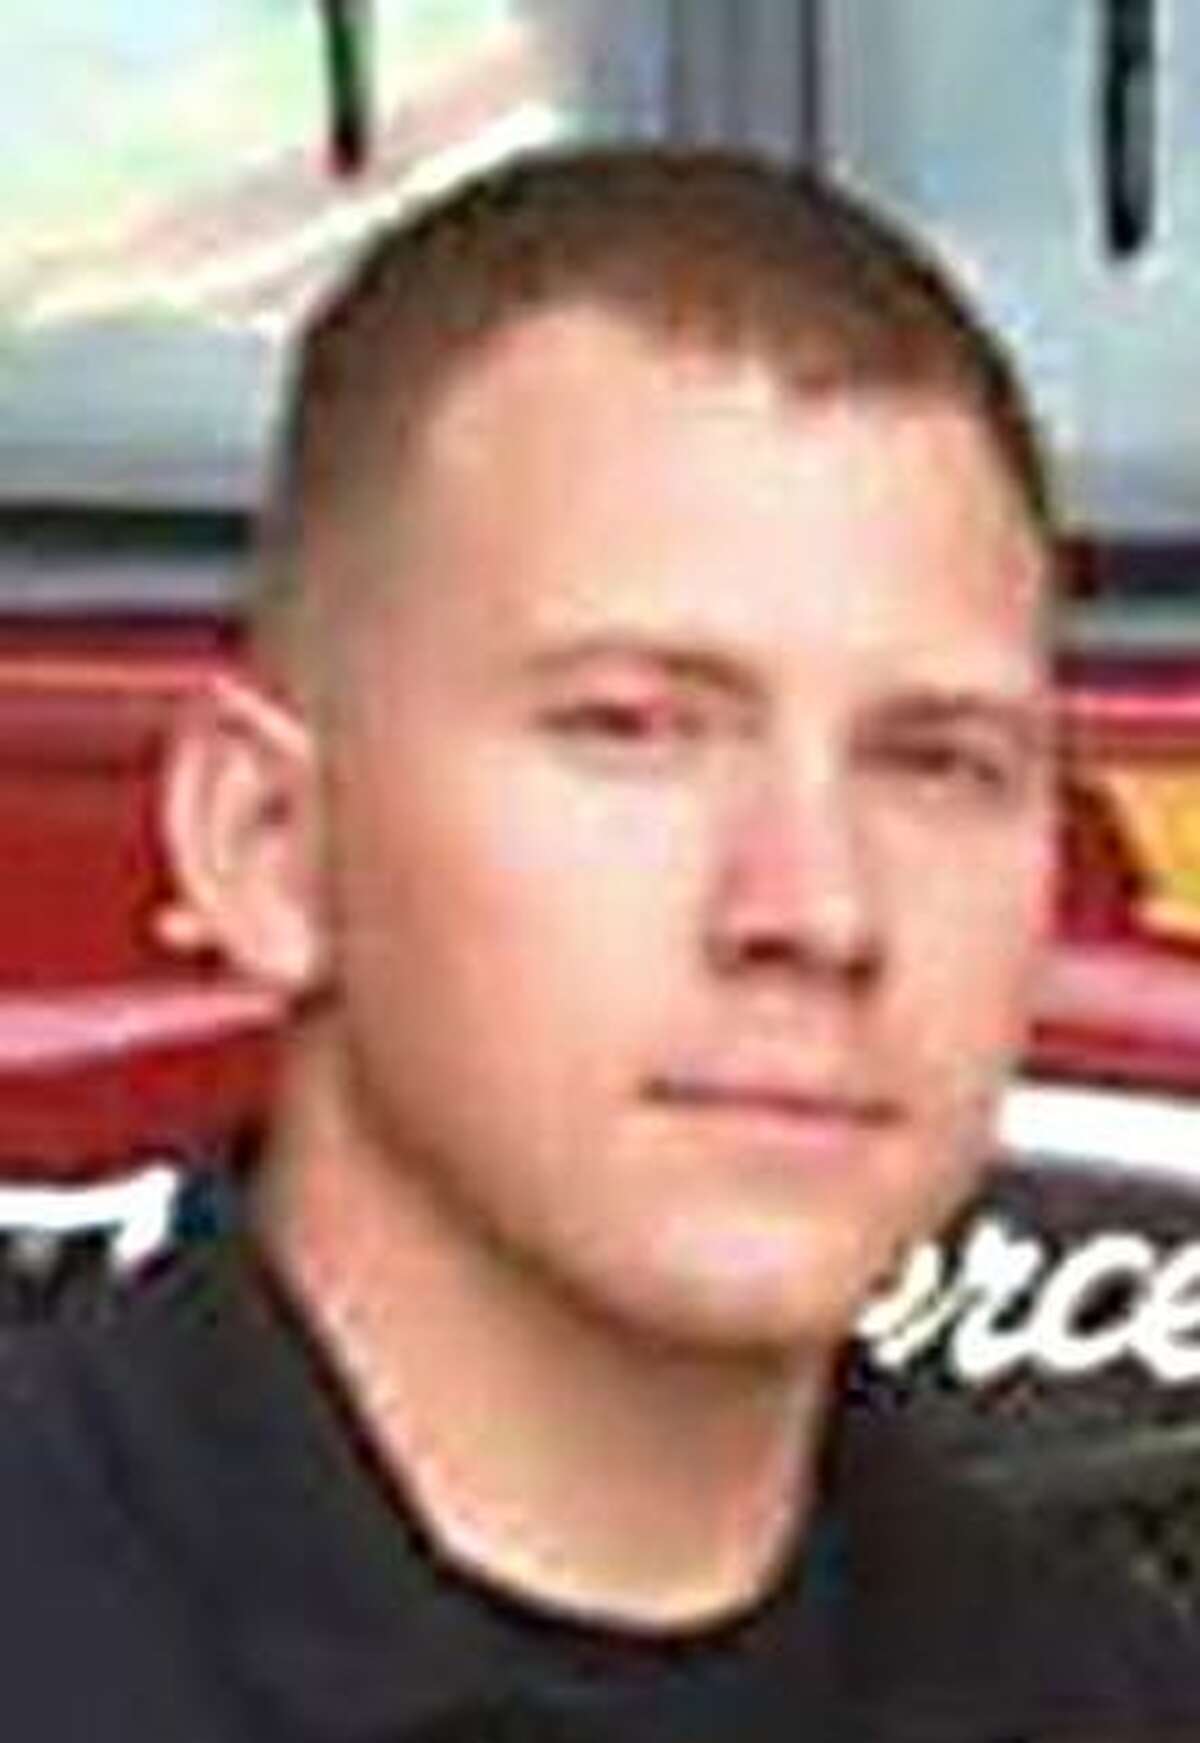 Man accused of setting blaze that killed San Antonio firefighter loses